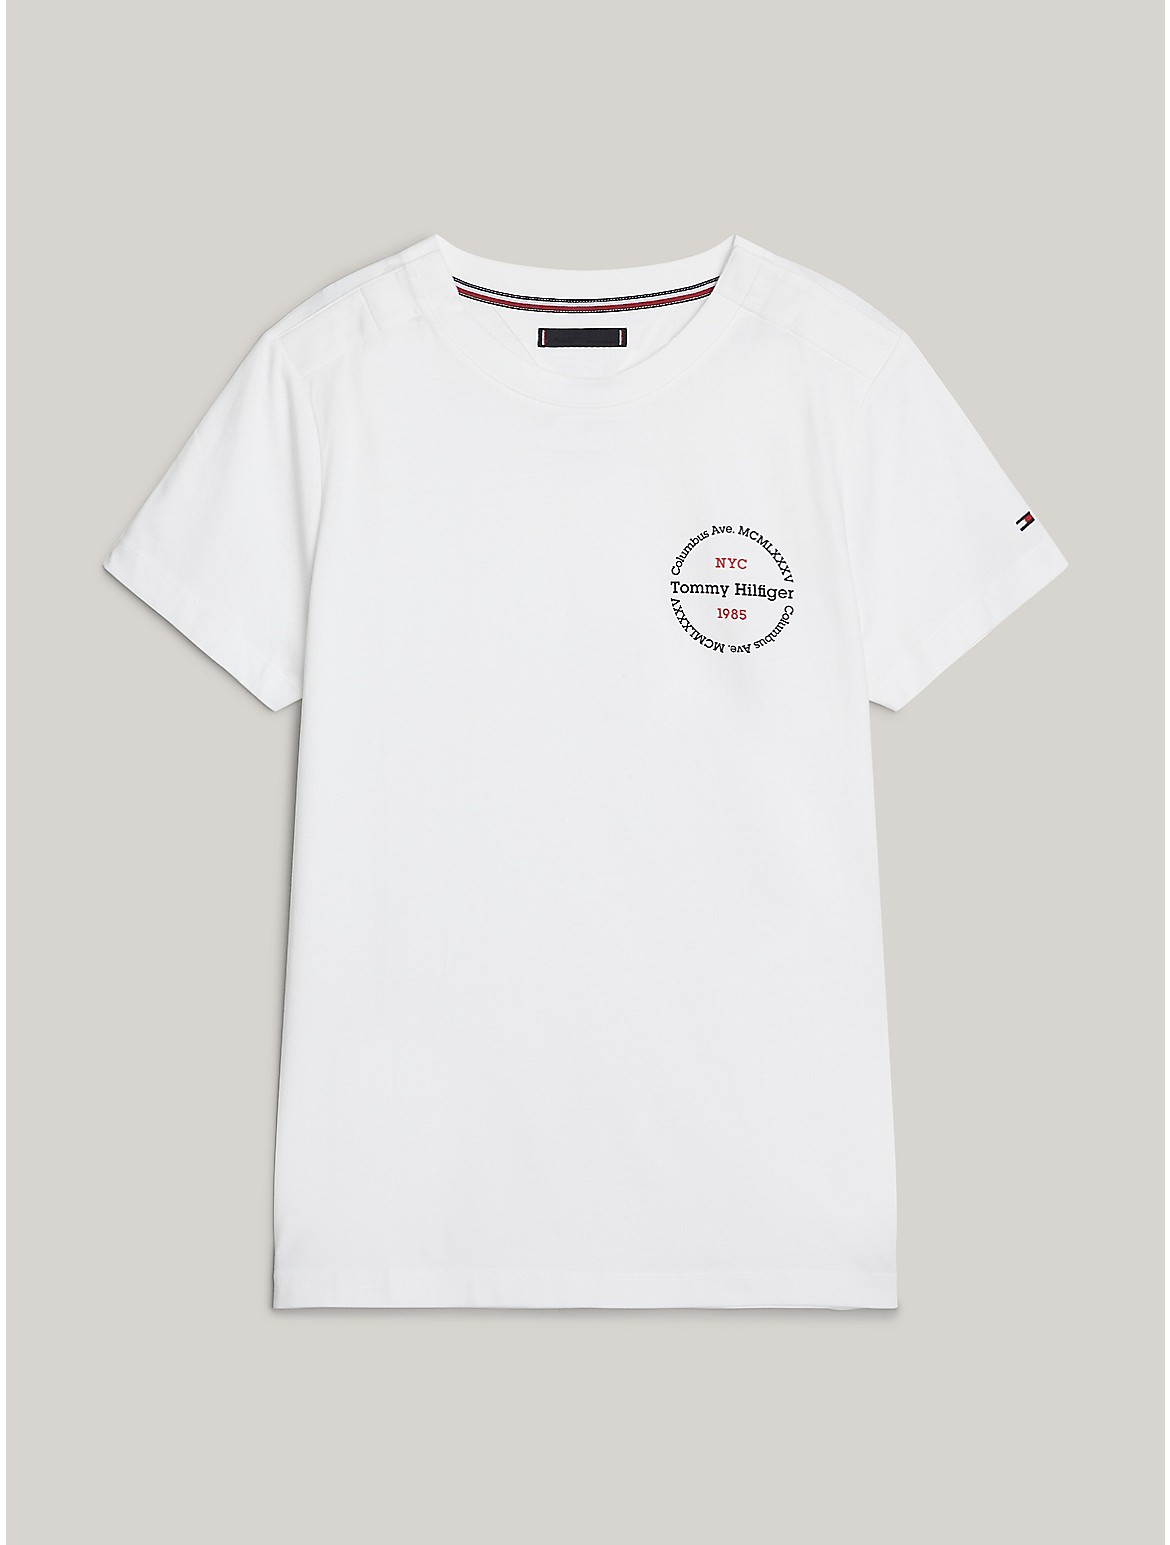 Tommy Hilfiger Men's Slim Fit Round Logo T-Shirt - White - L